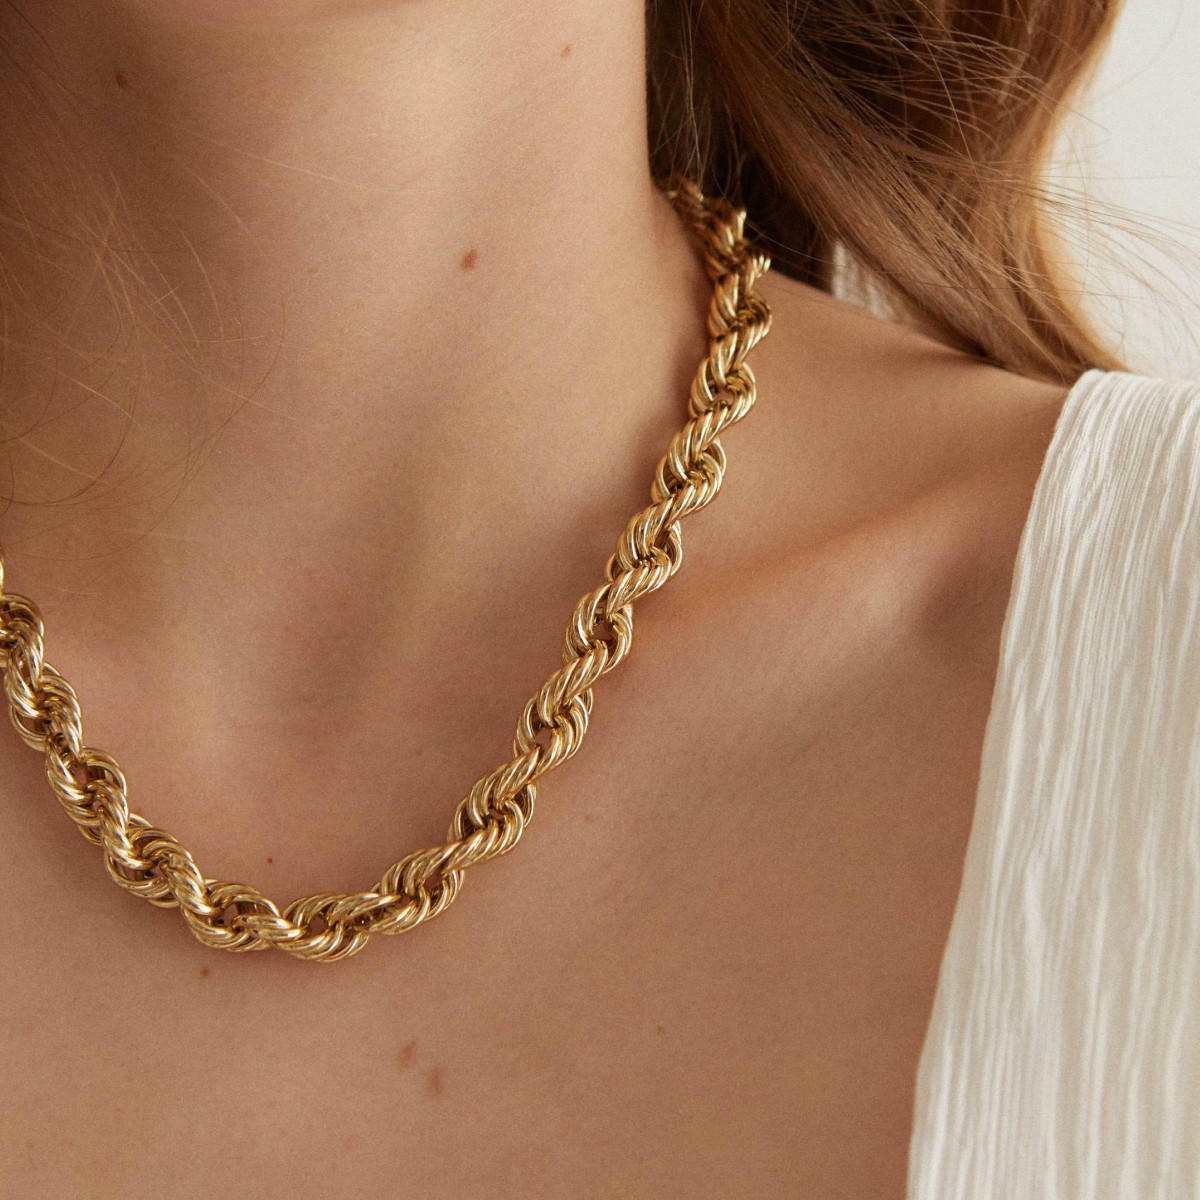 Alma Necklace - Halsketten - 24k vergoldet